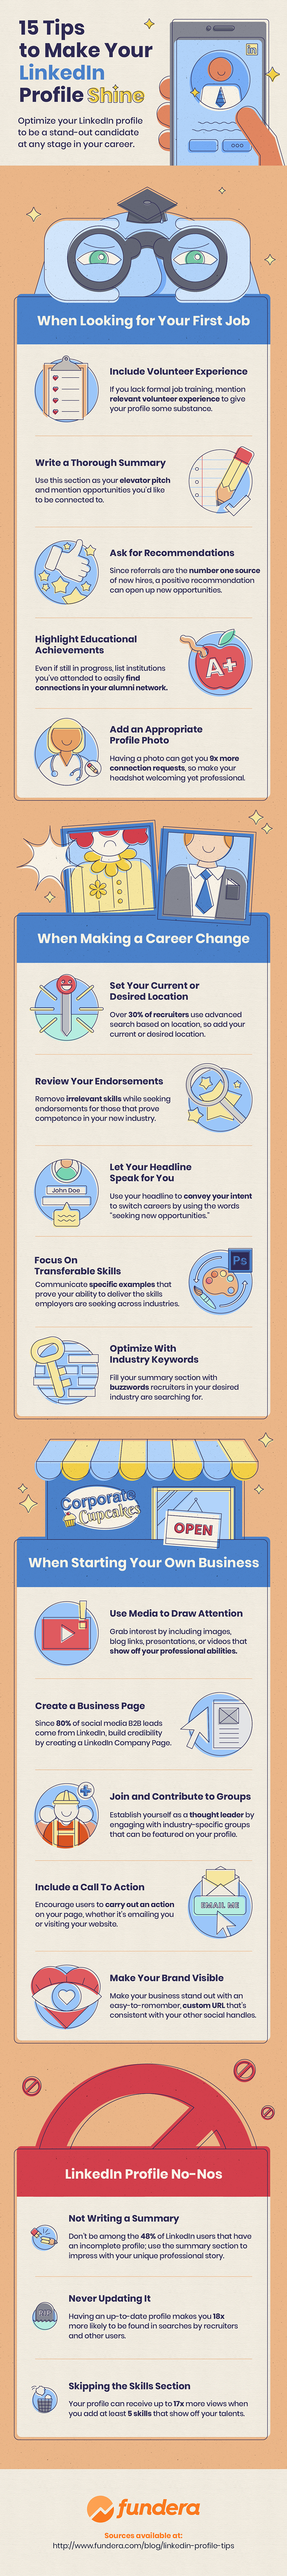 15 Tips to Make Your LinkedIn Profile Shine-infographic-v4